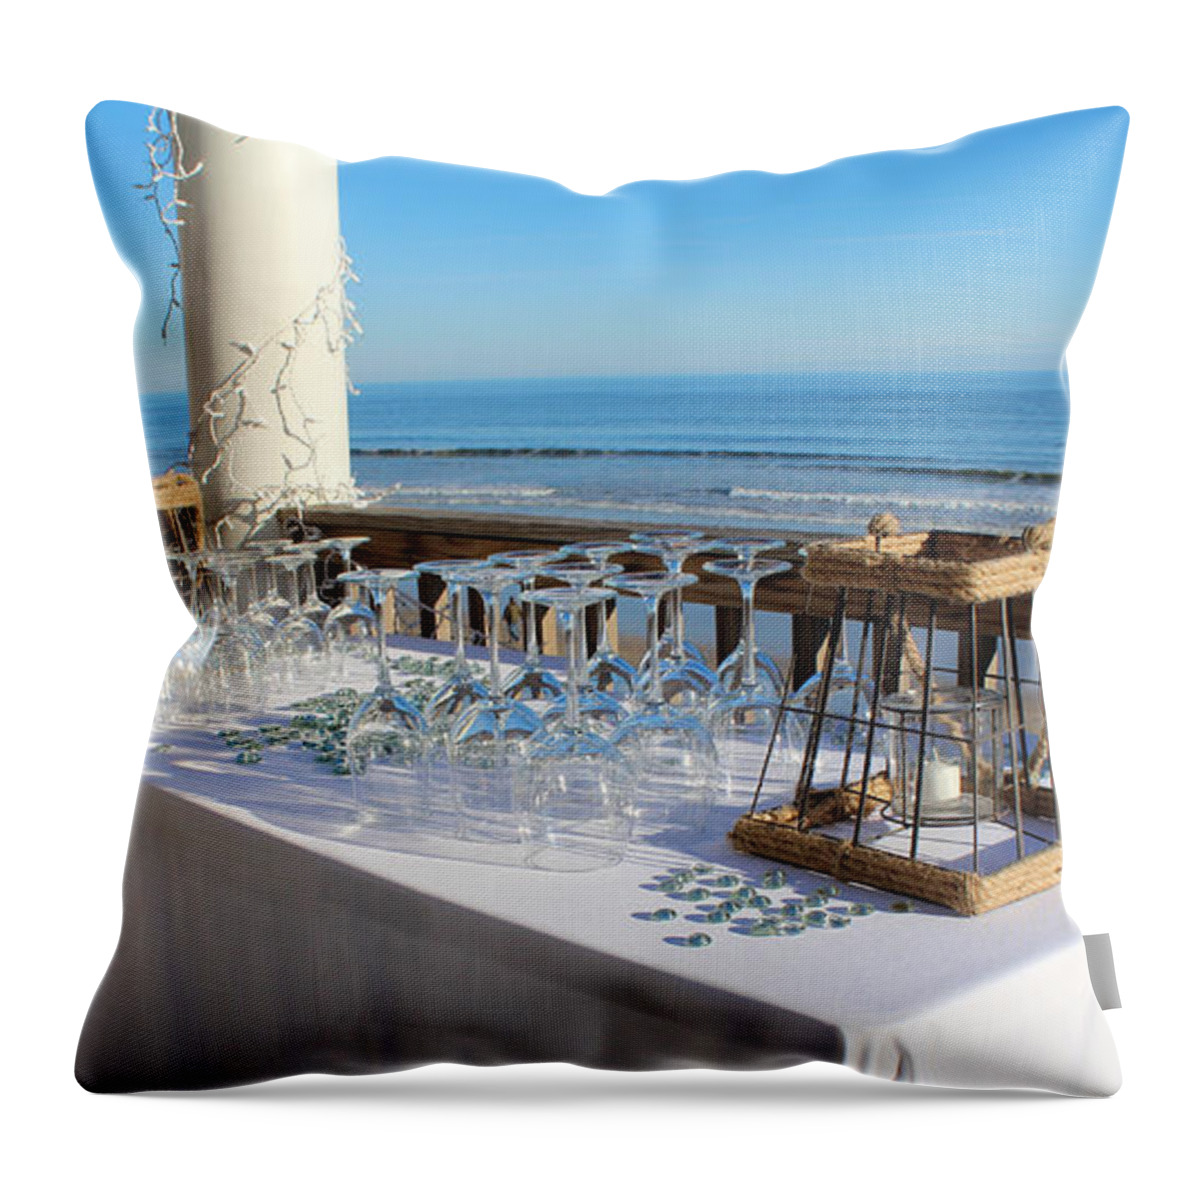 Beach Throw Pillow featuring the photograph Special Event At The Beach by Cynthia Guinn